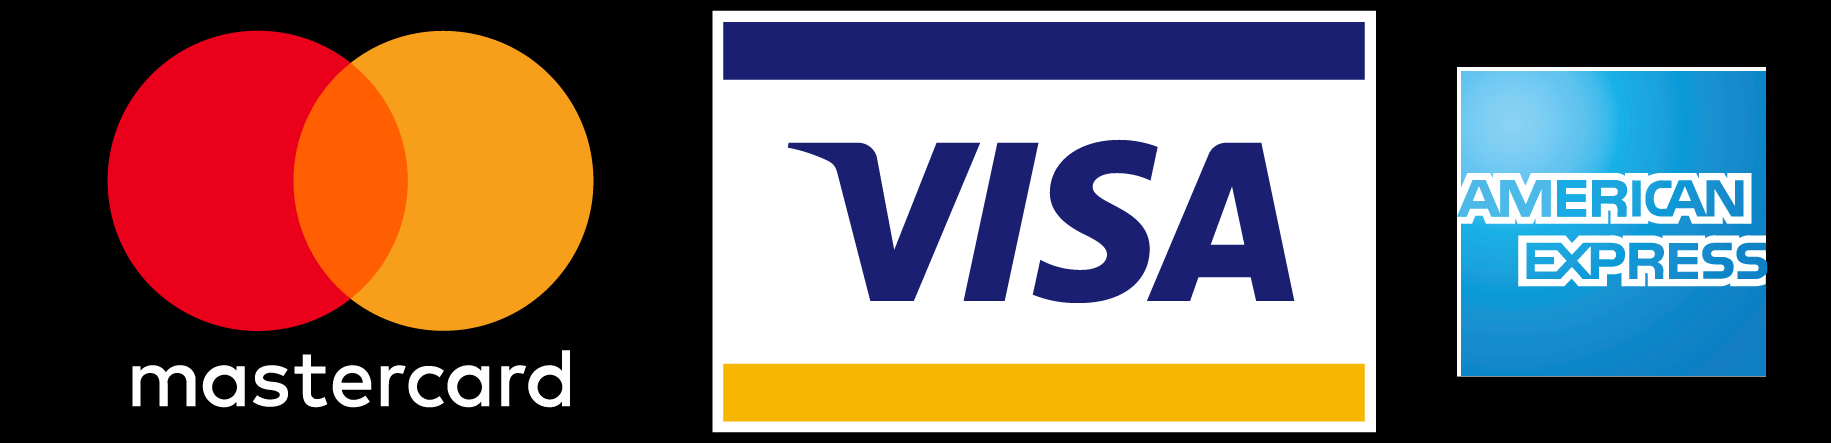 American Express Visa MasterCard Logo - MasterCard Logo Vector Free Download